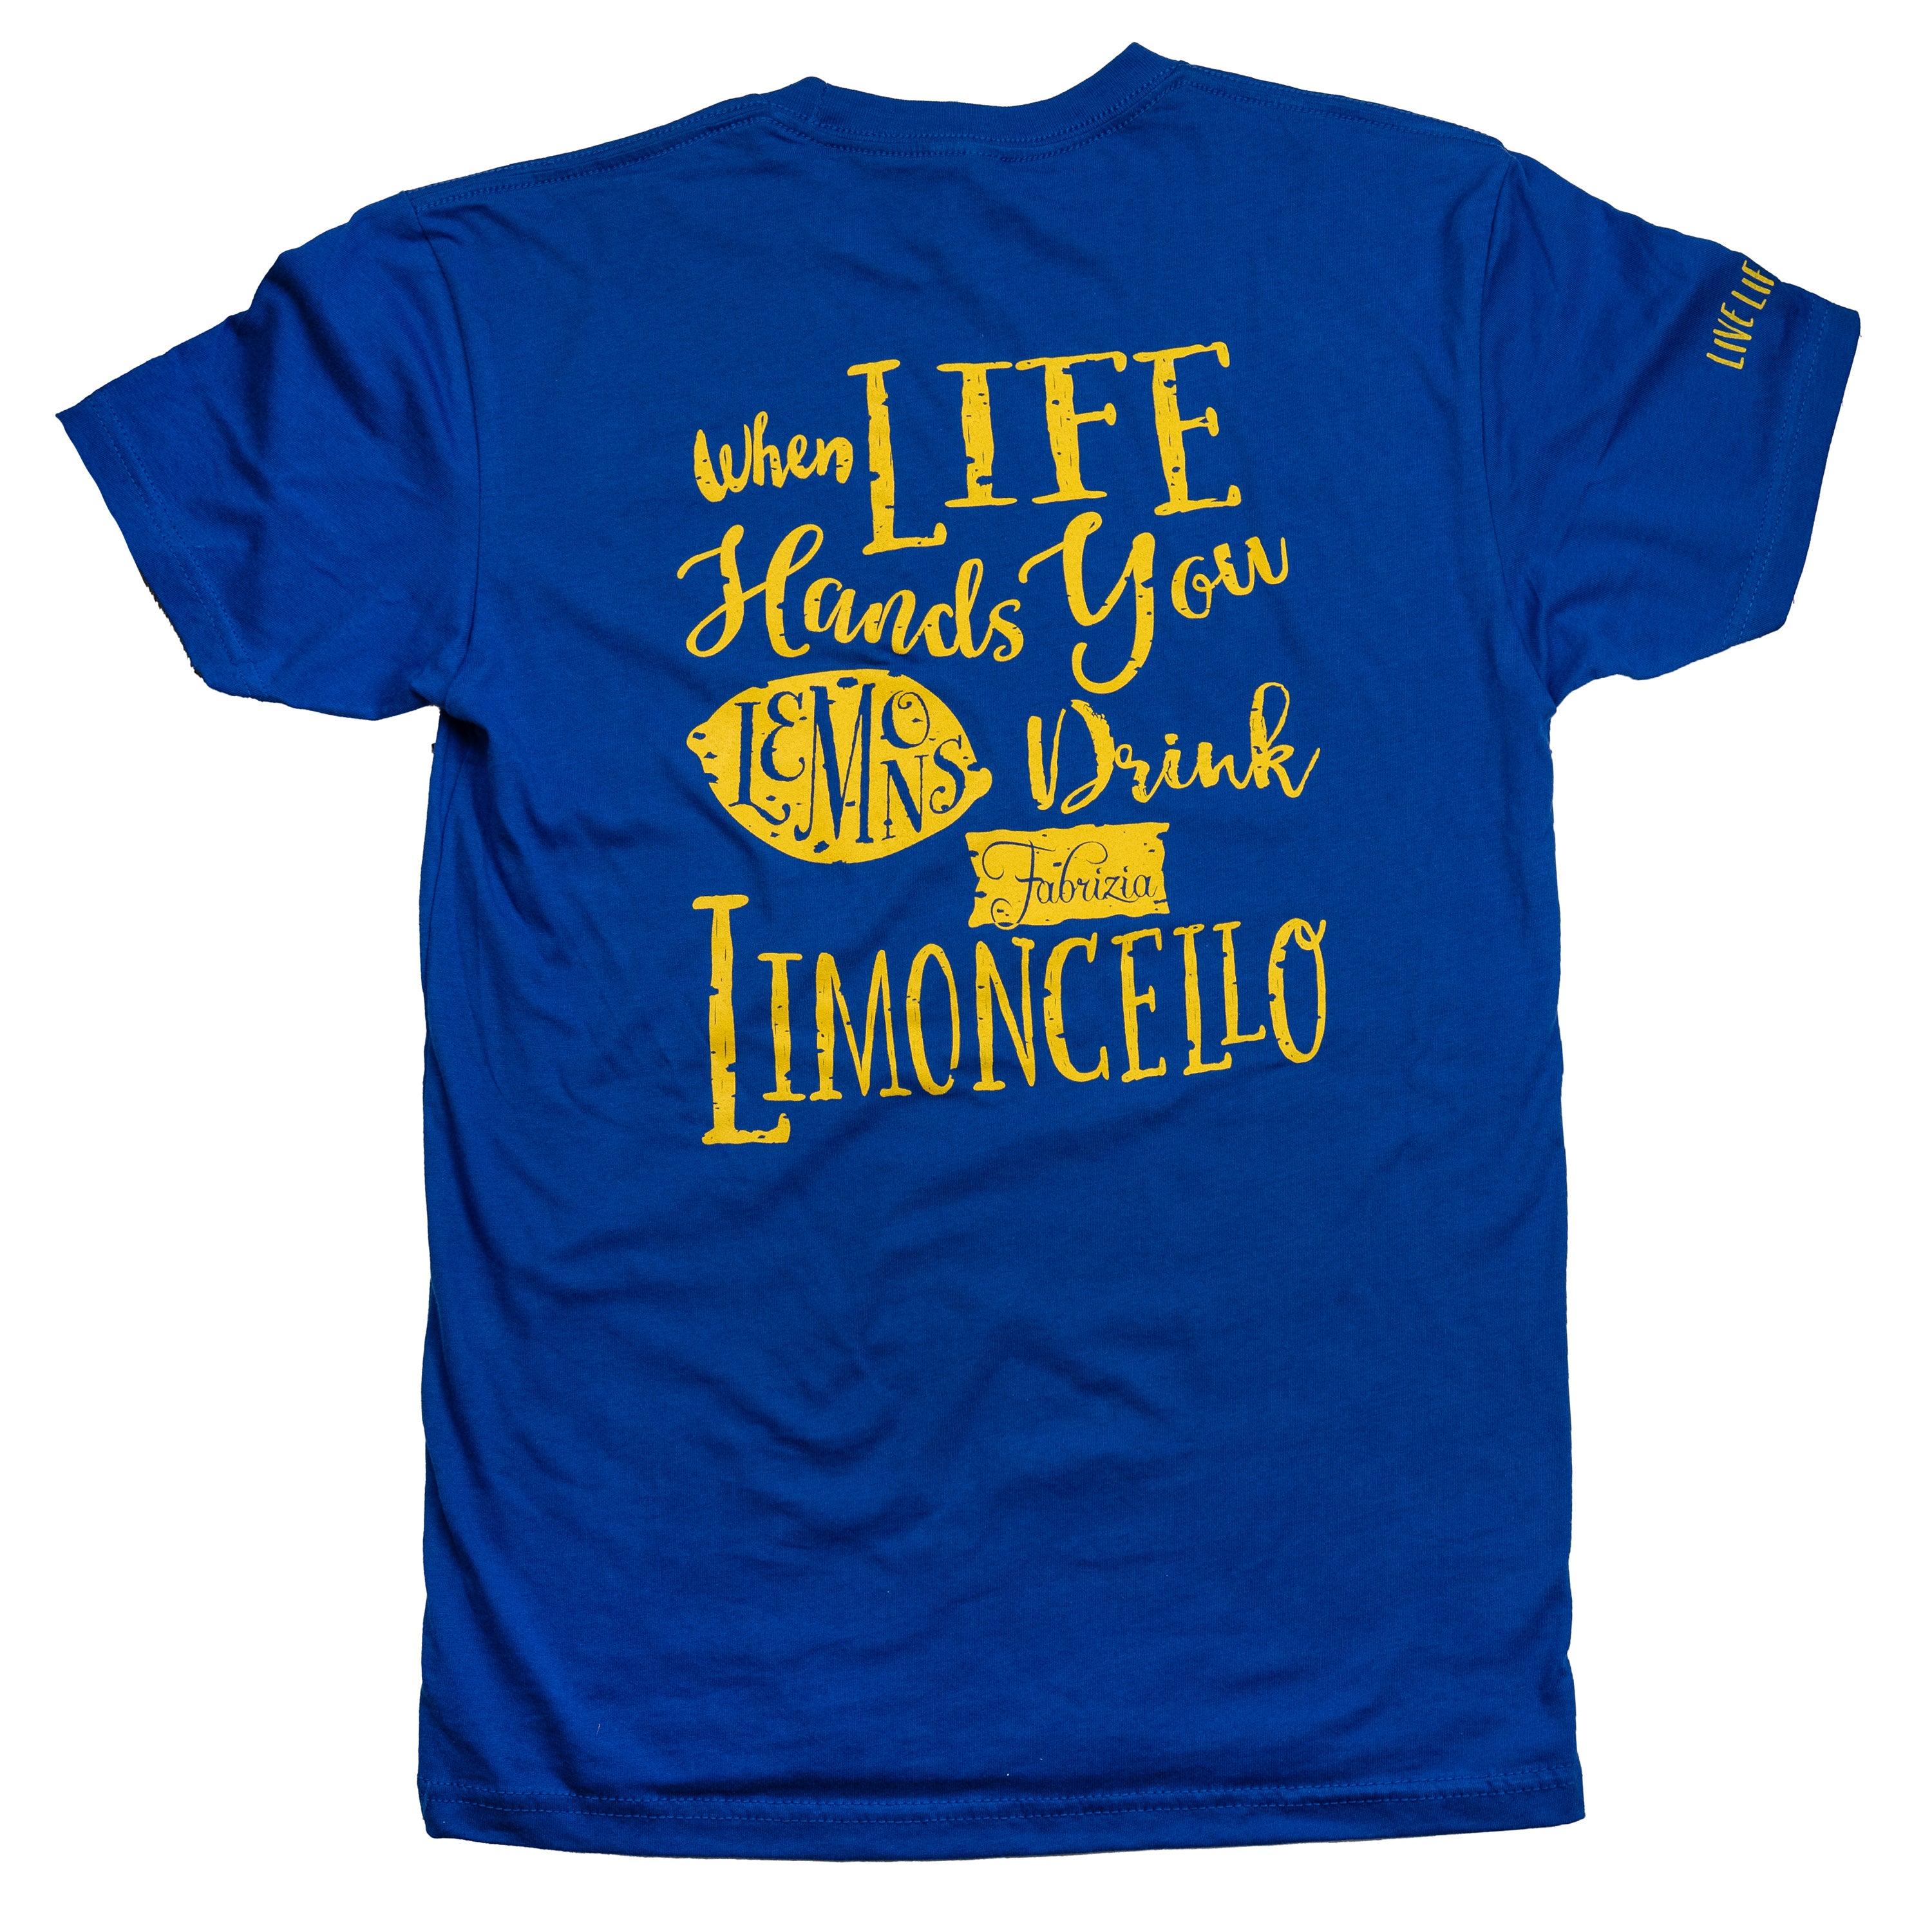 When Life Hands You Lemons T-Shirt